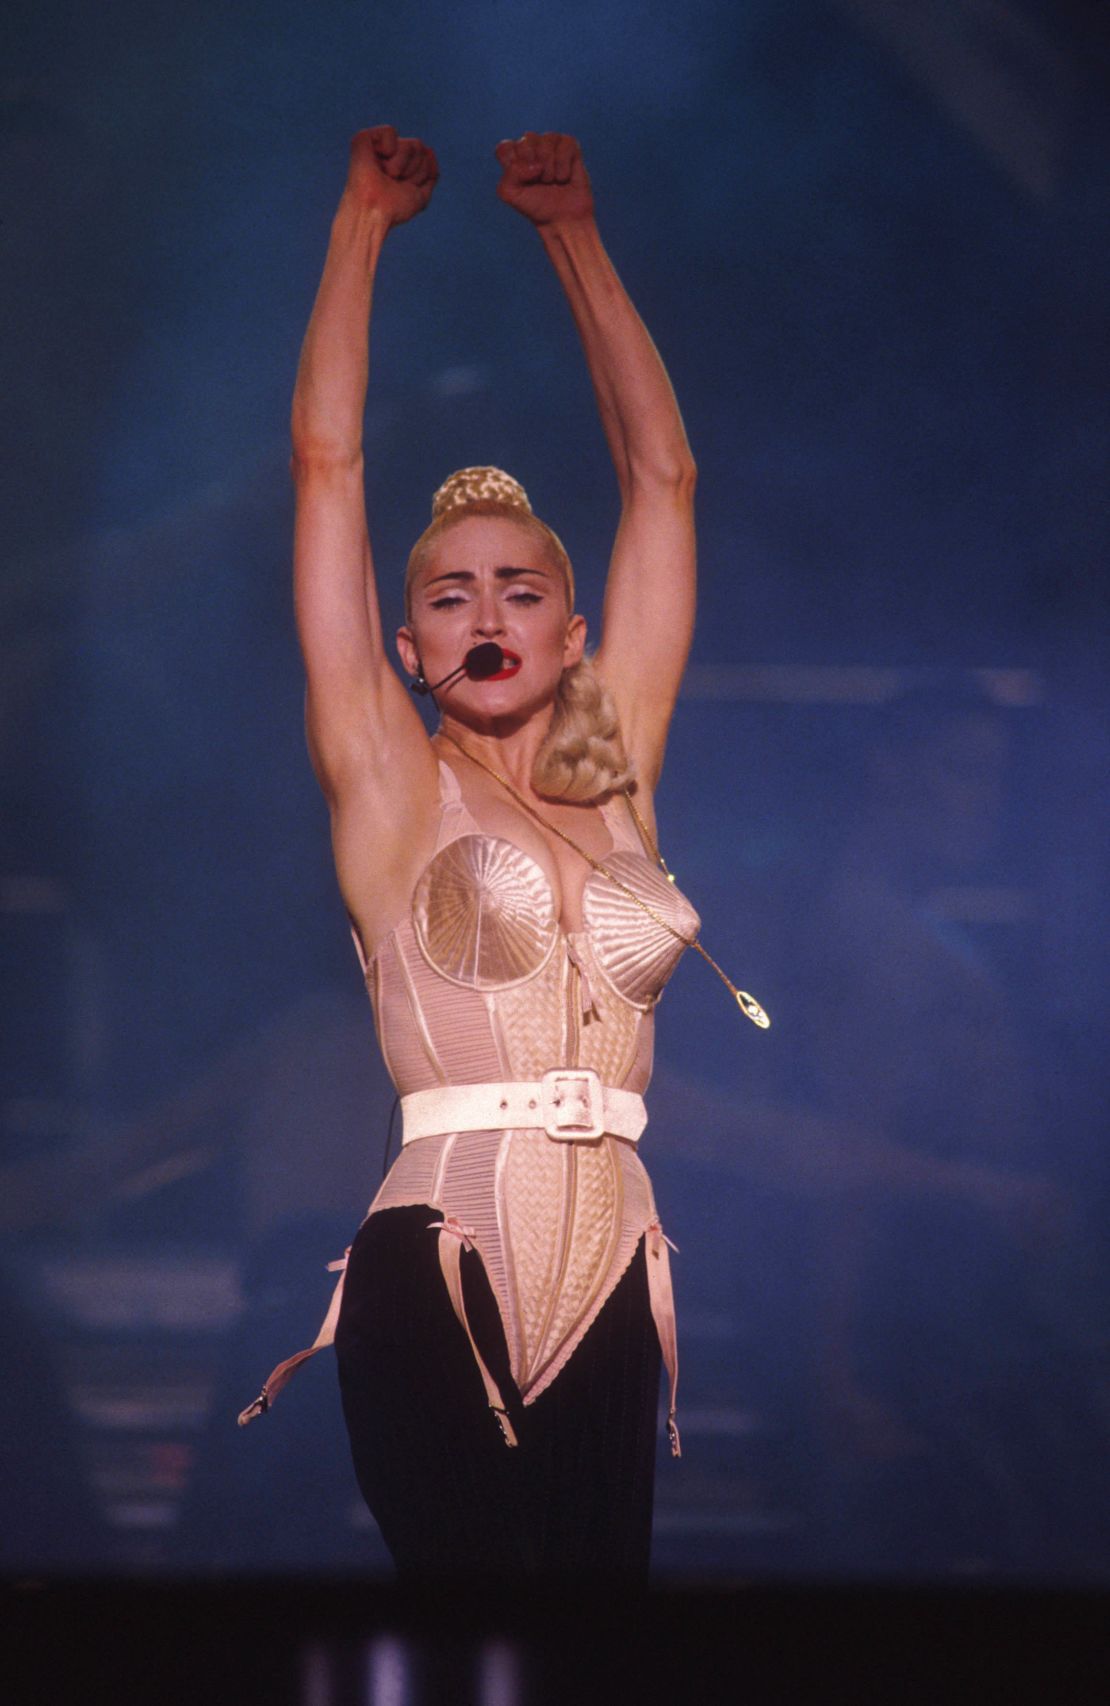 madonna cone bra - Google Search  90s female singers, Madonna, Madonna  fashion